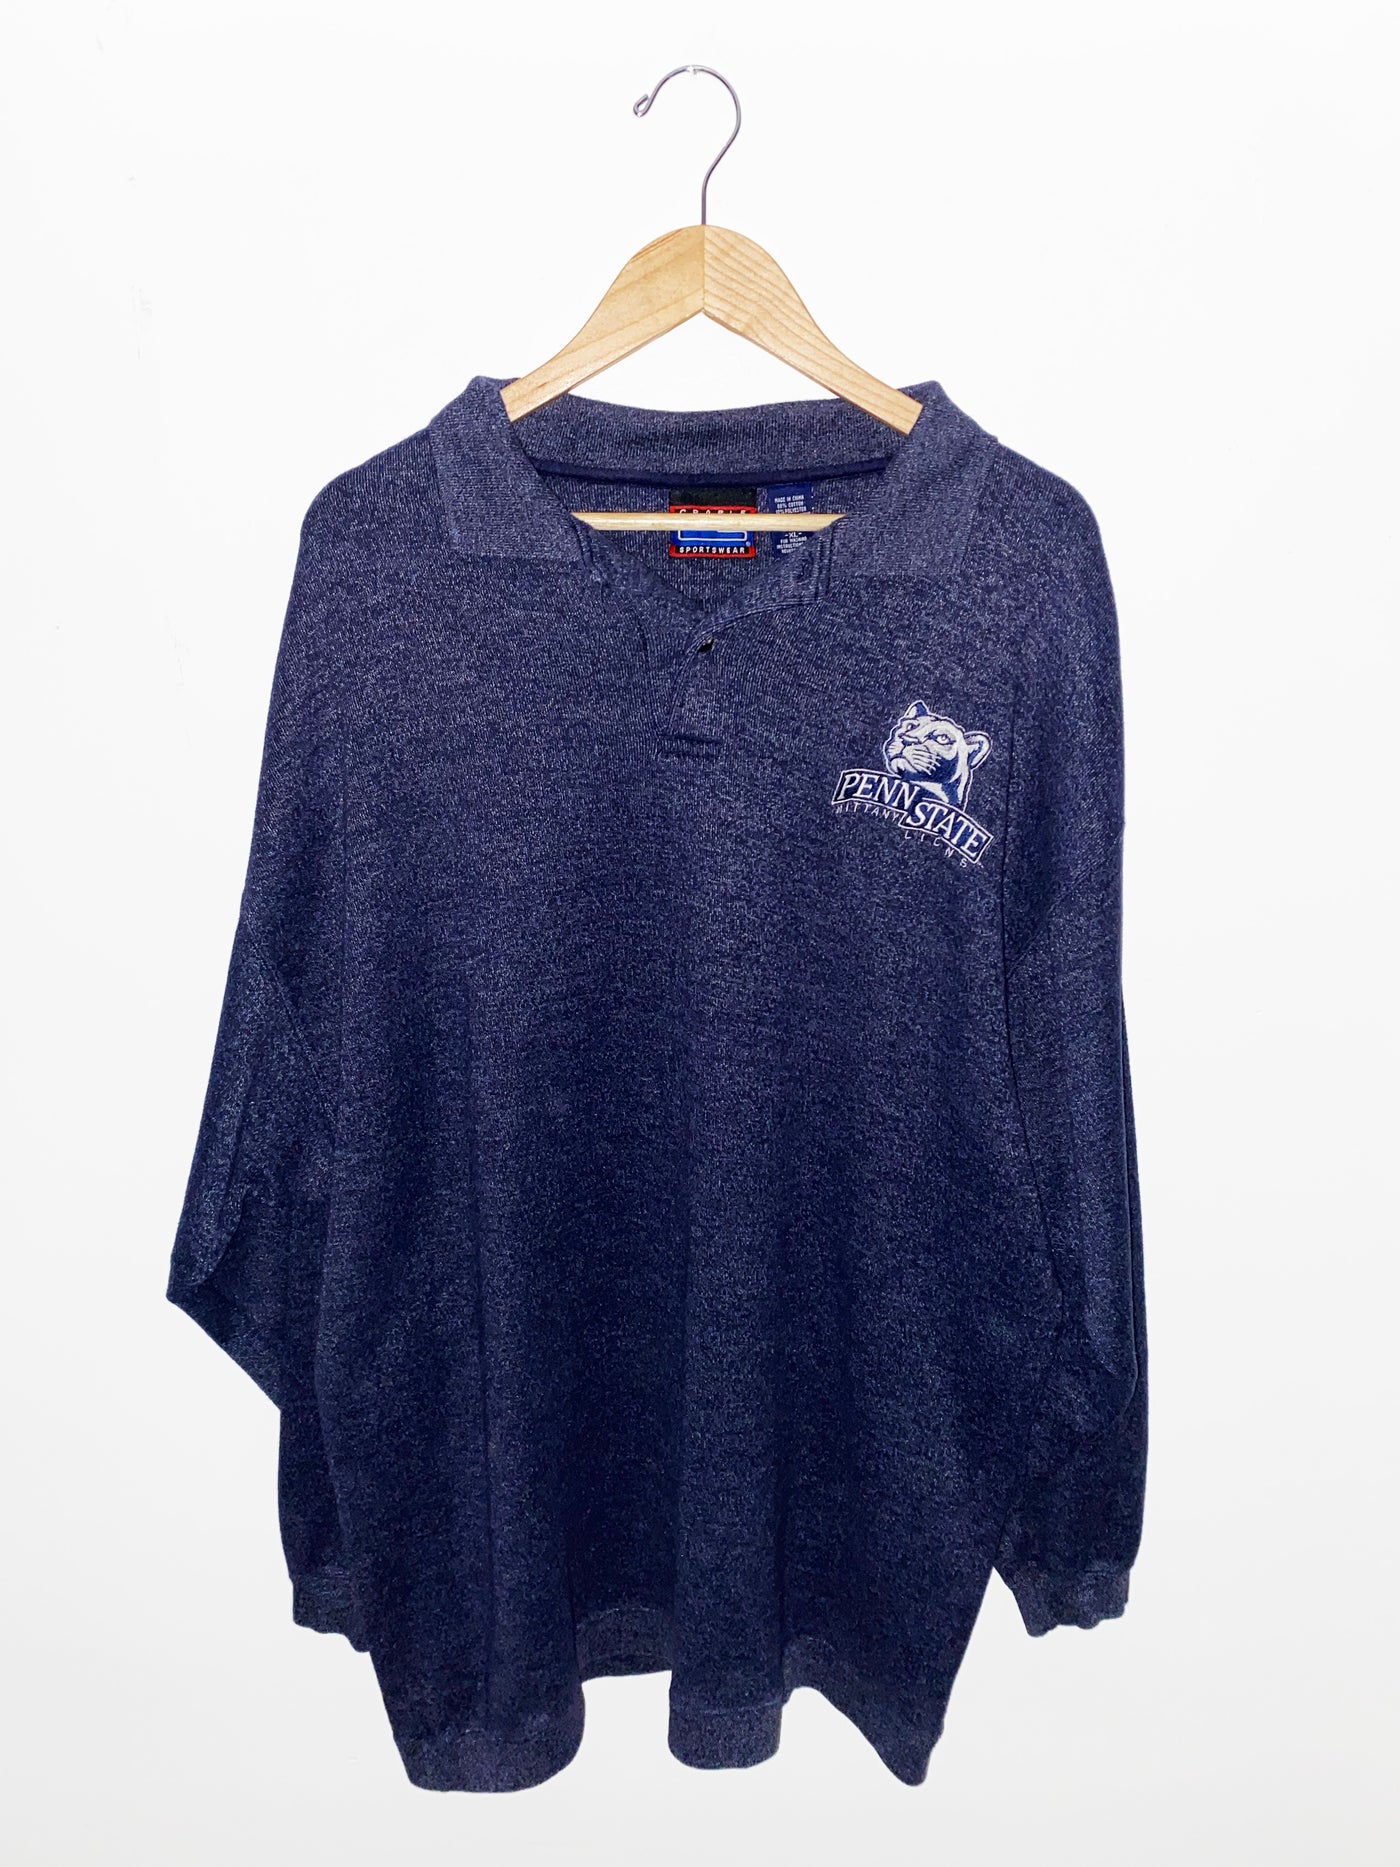 Vintage Crable Sportswear Penn State Collared Sweatshirt